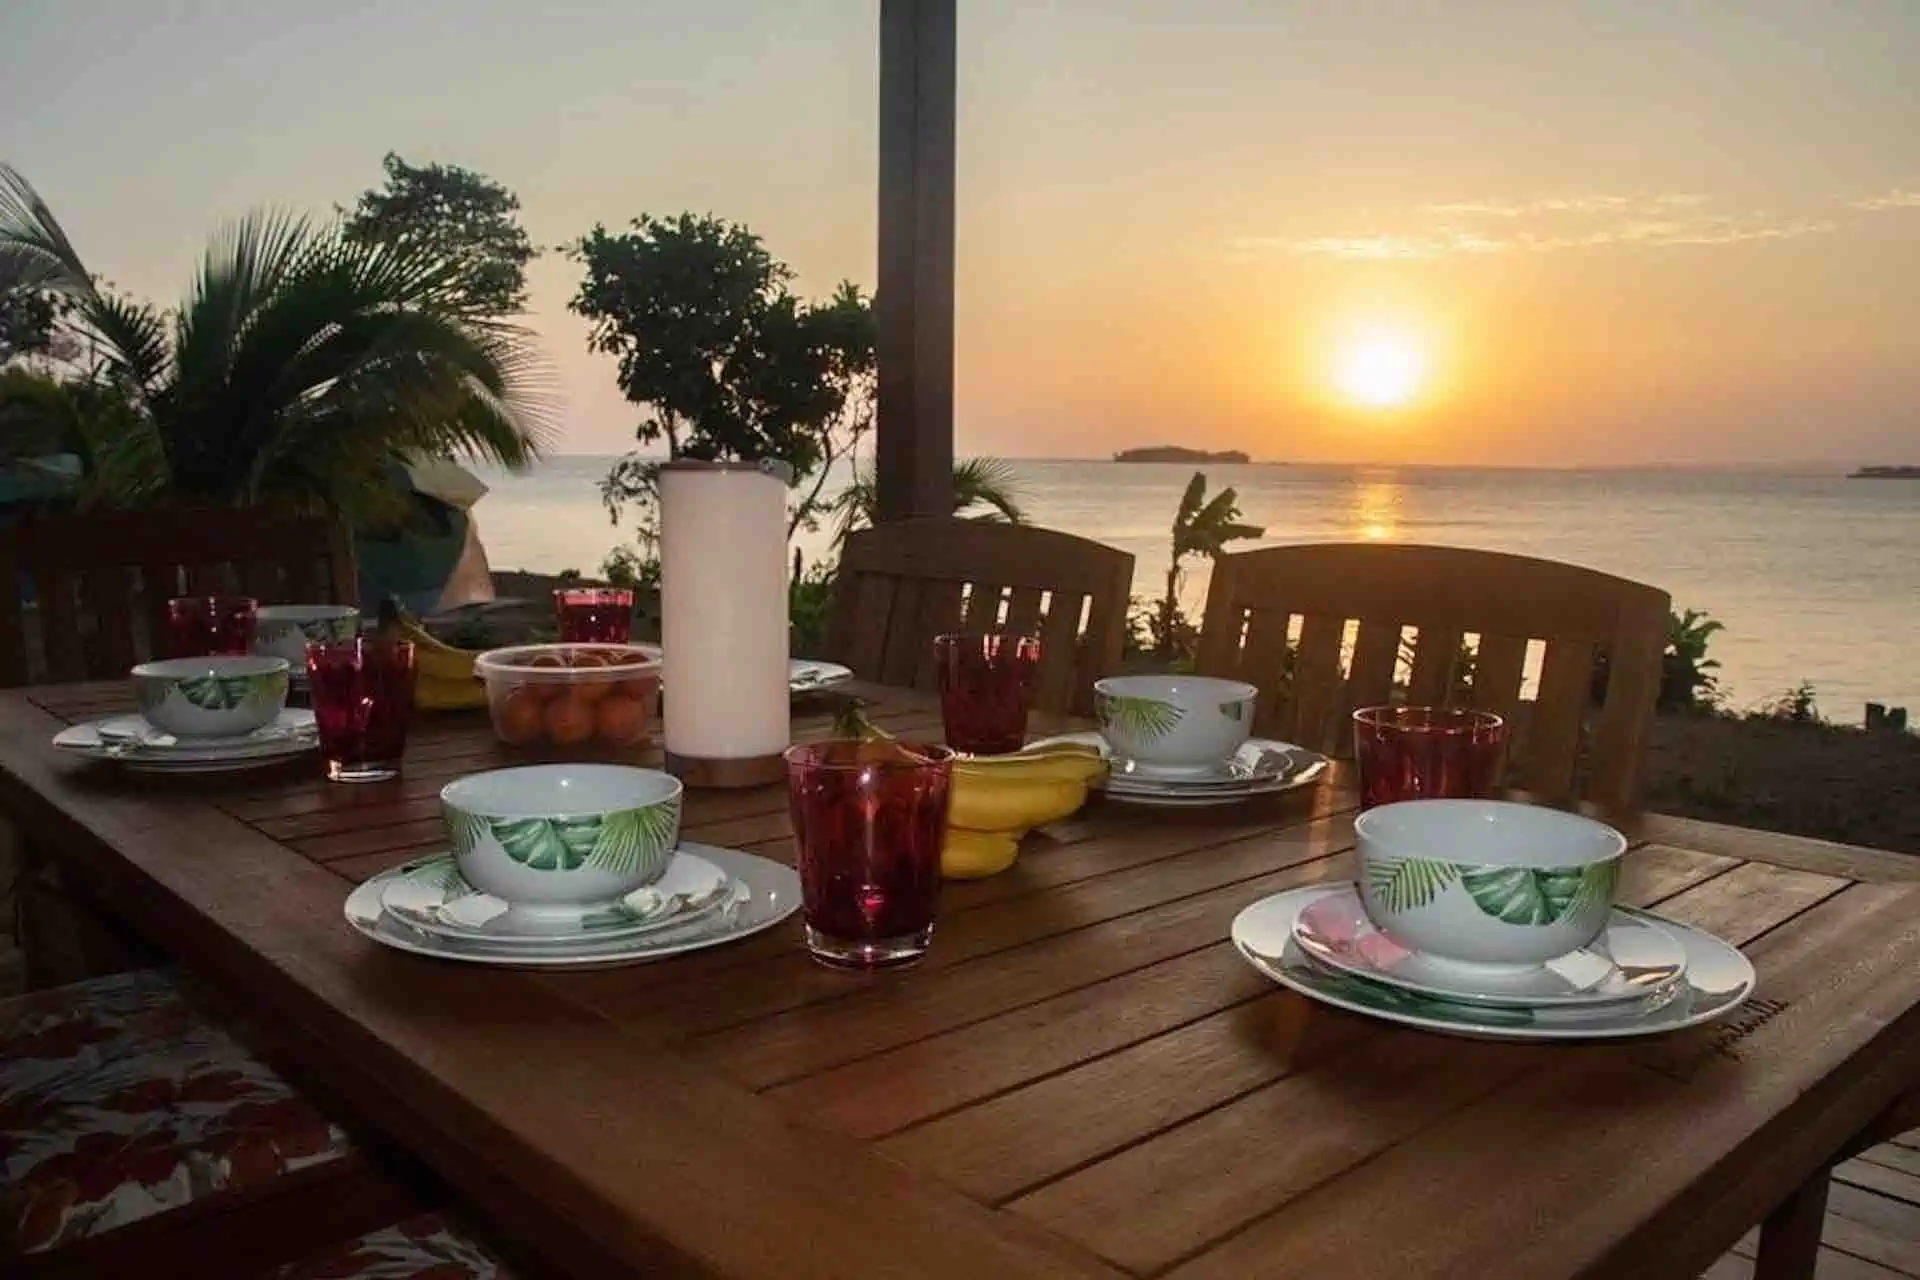 Las Perlas island Sonny Island Resort Panama restaurant at sunset